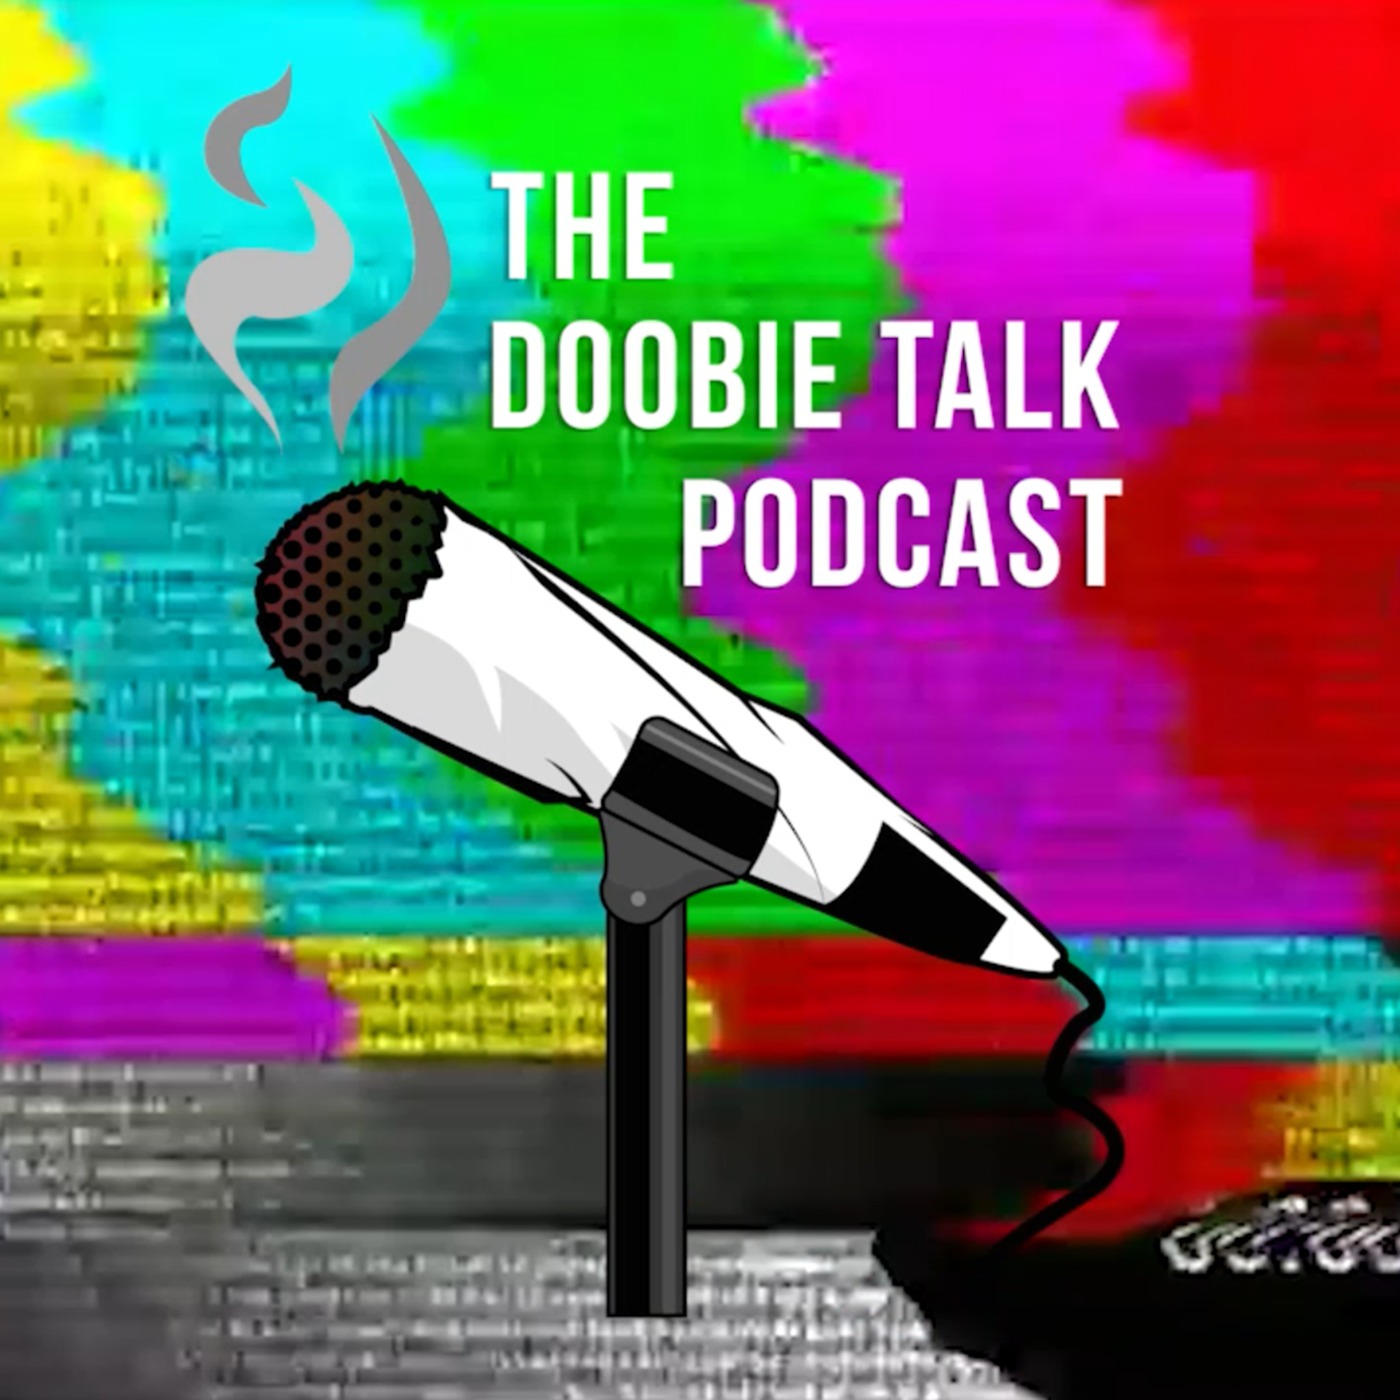 Doobie Talk Podcast